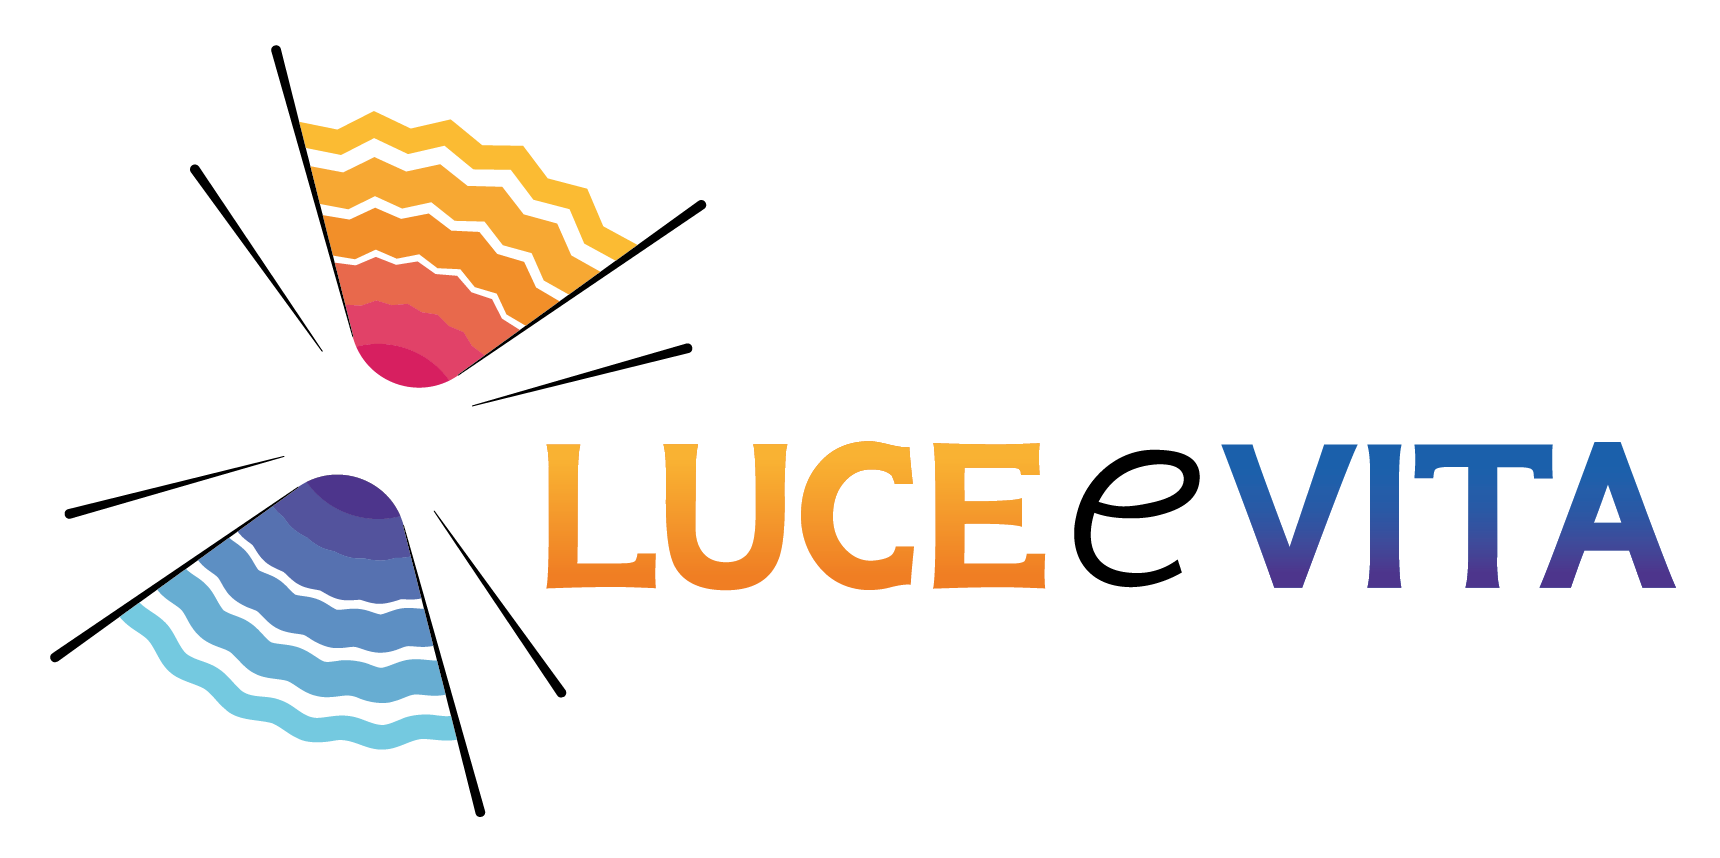 Luce e Vita online